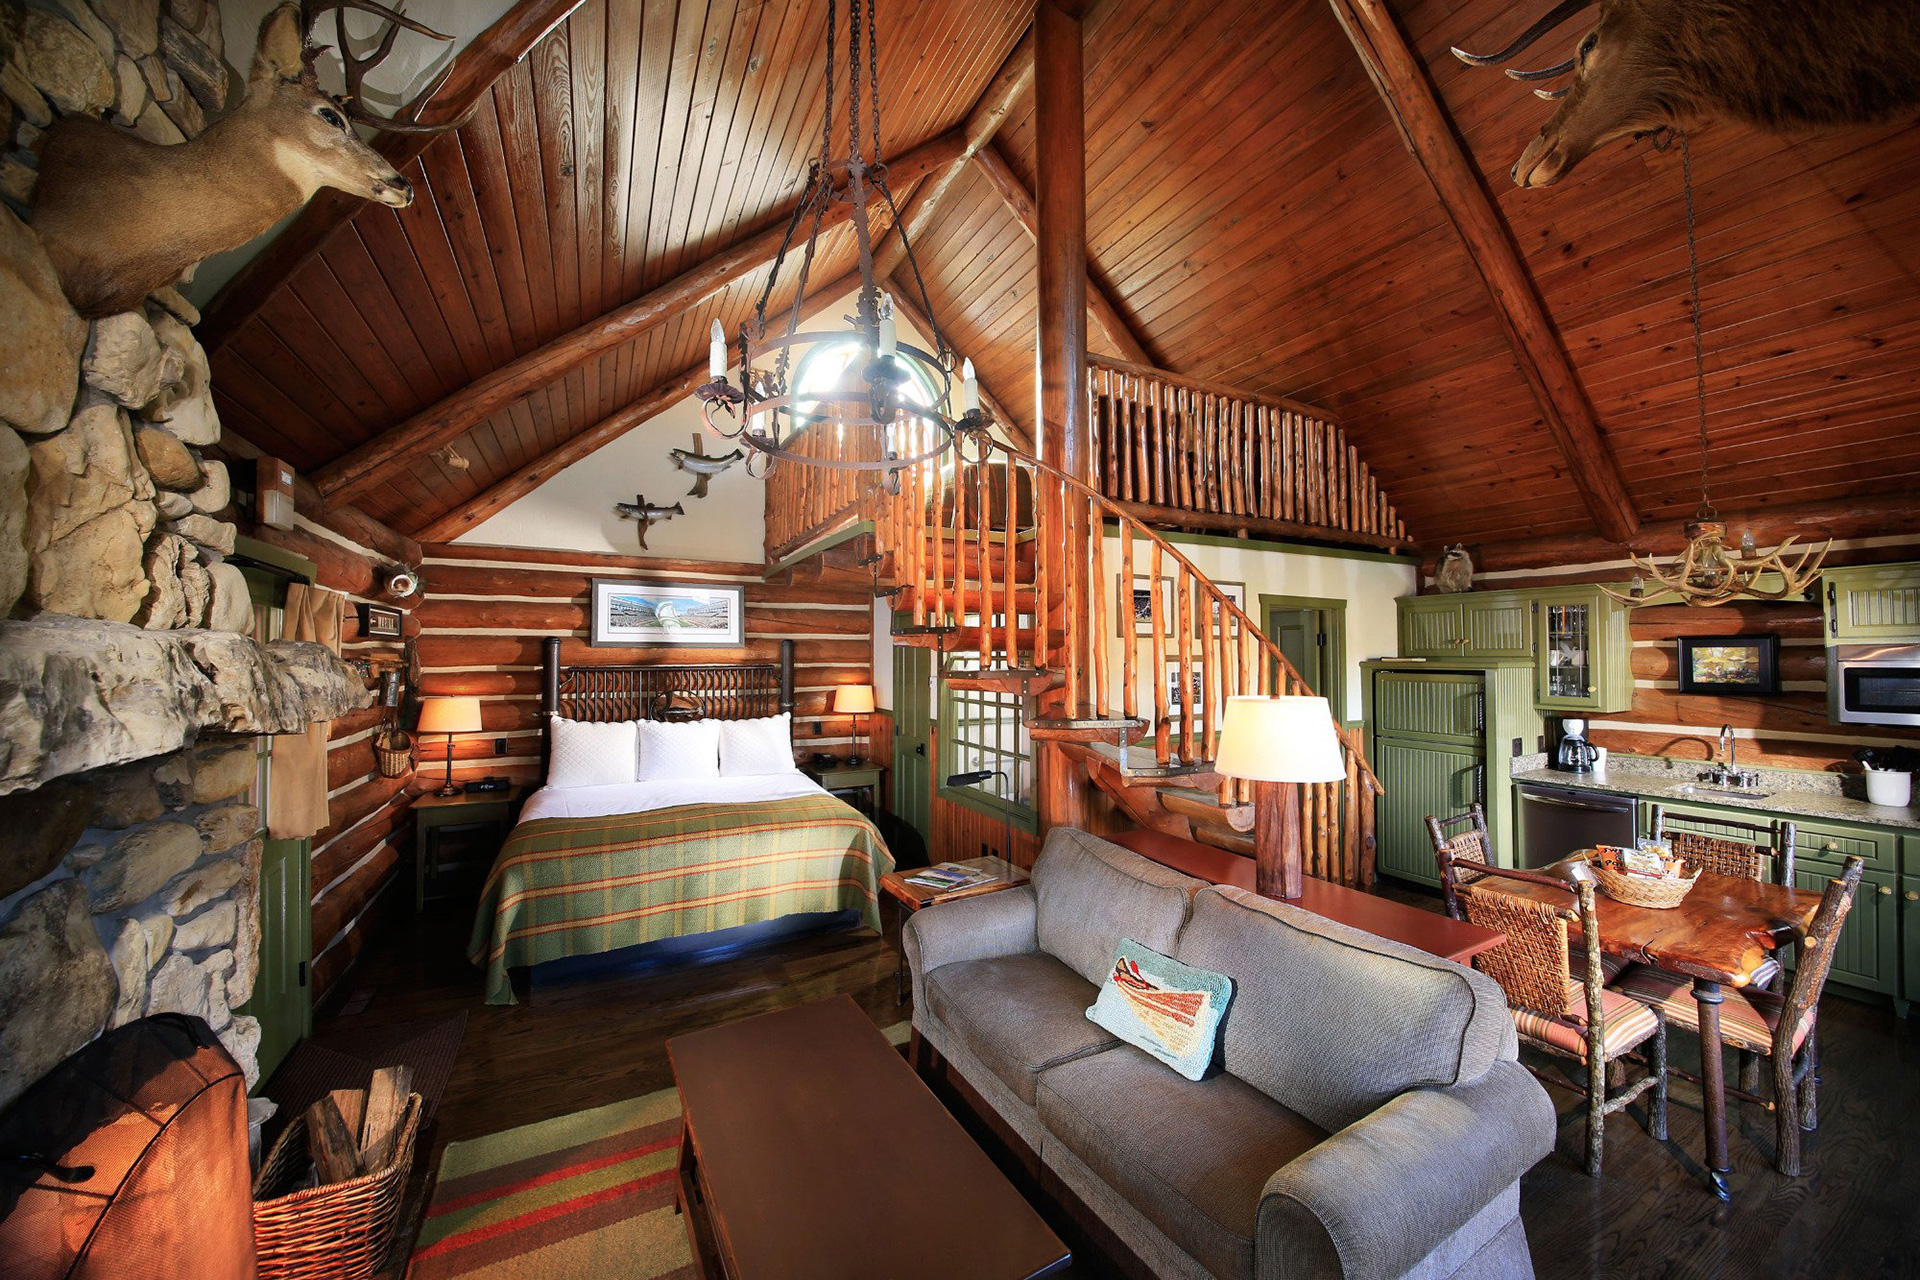 Private one bedroom with loft log cabin interior; Courtesy of Big Cedar Lodge